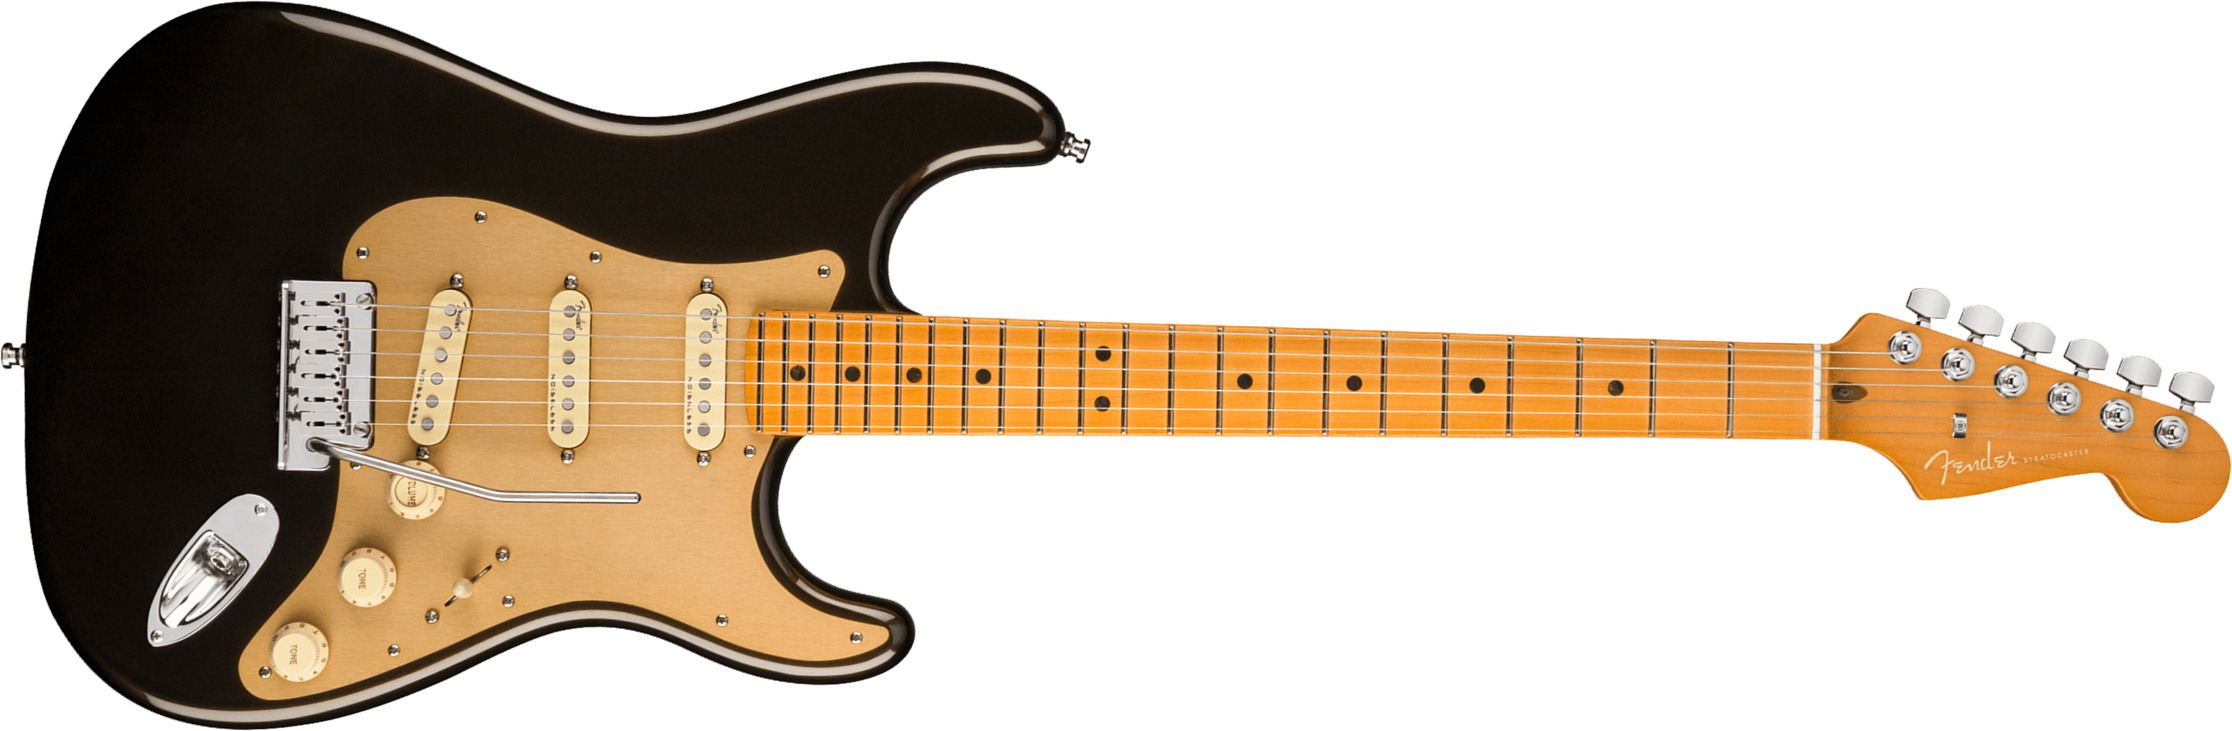 Fender Strat American Ultra 2019 Usa Mn - Texas Tea - Elektrische gitaar in Str-vorm - Main picture